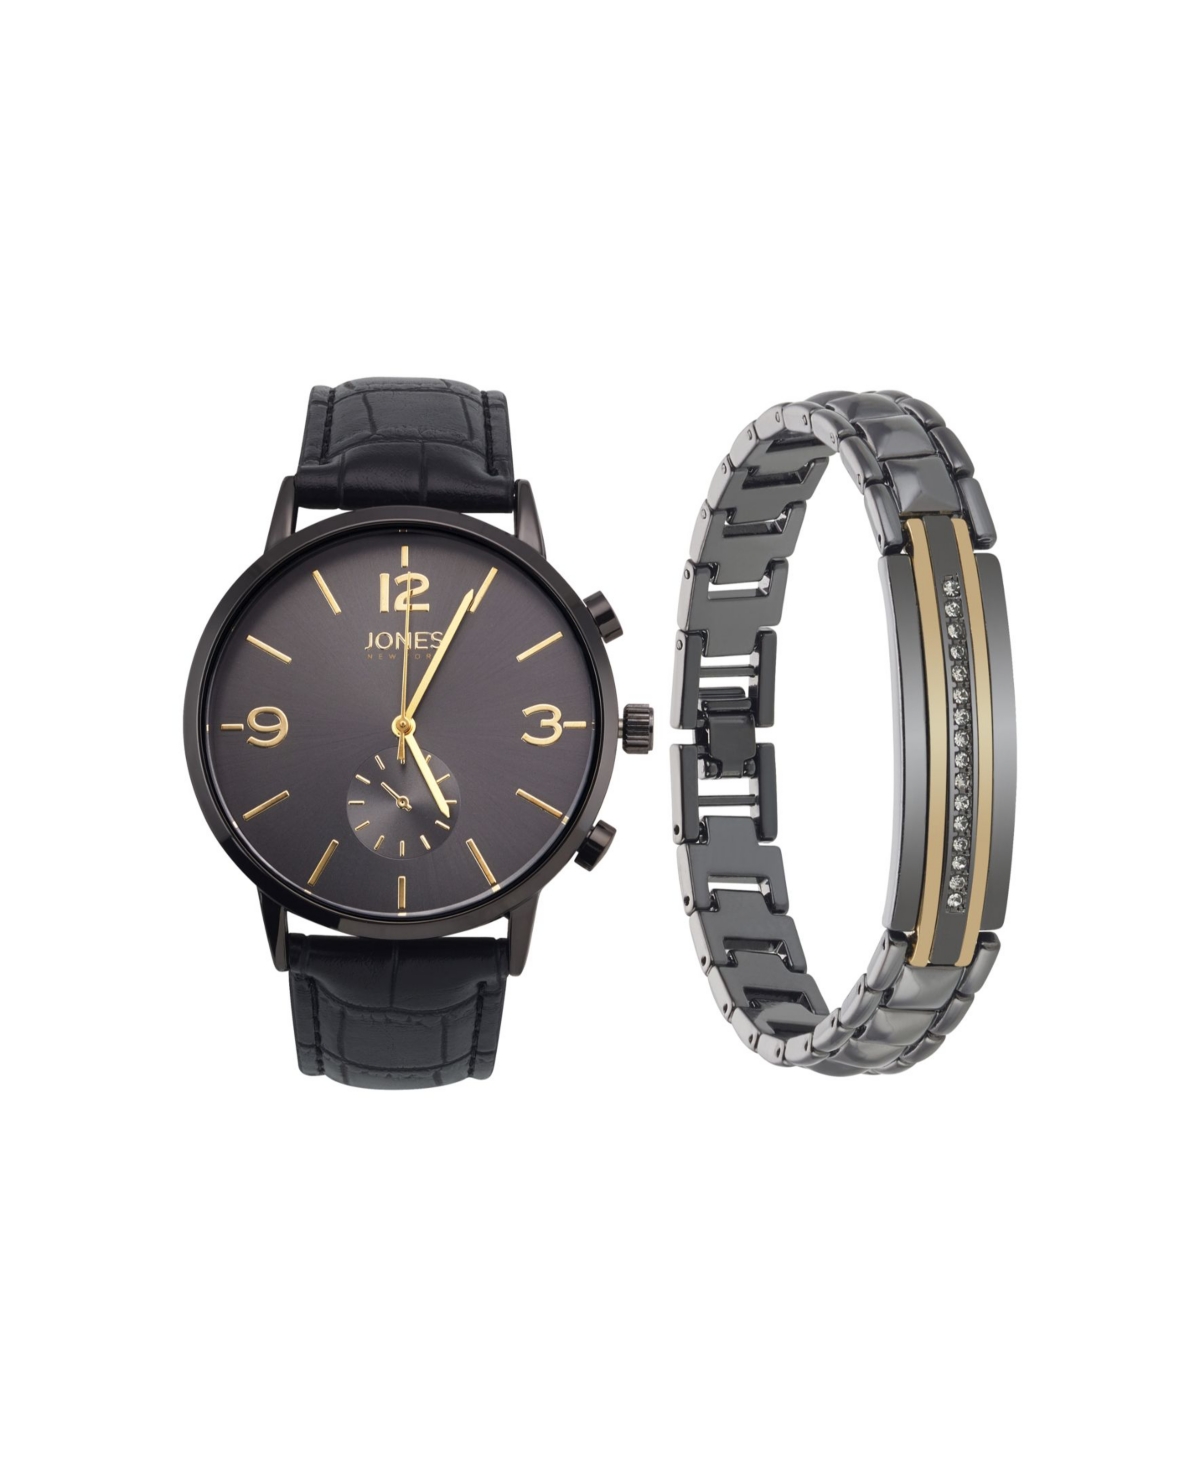 Men's Analog Black Polyurethane Strap Watch, 42mm and Bracelet Set - Black